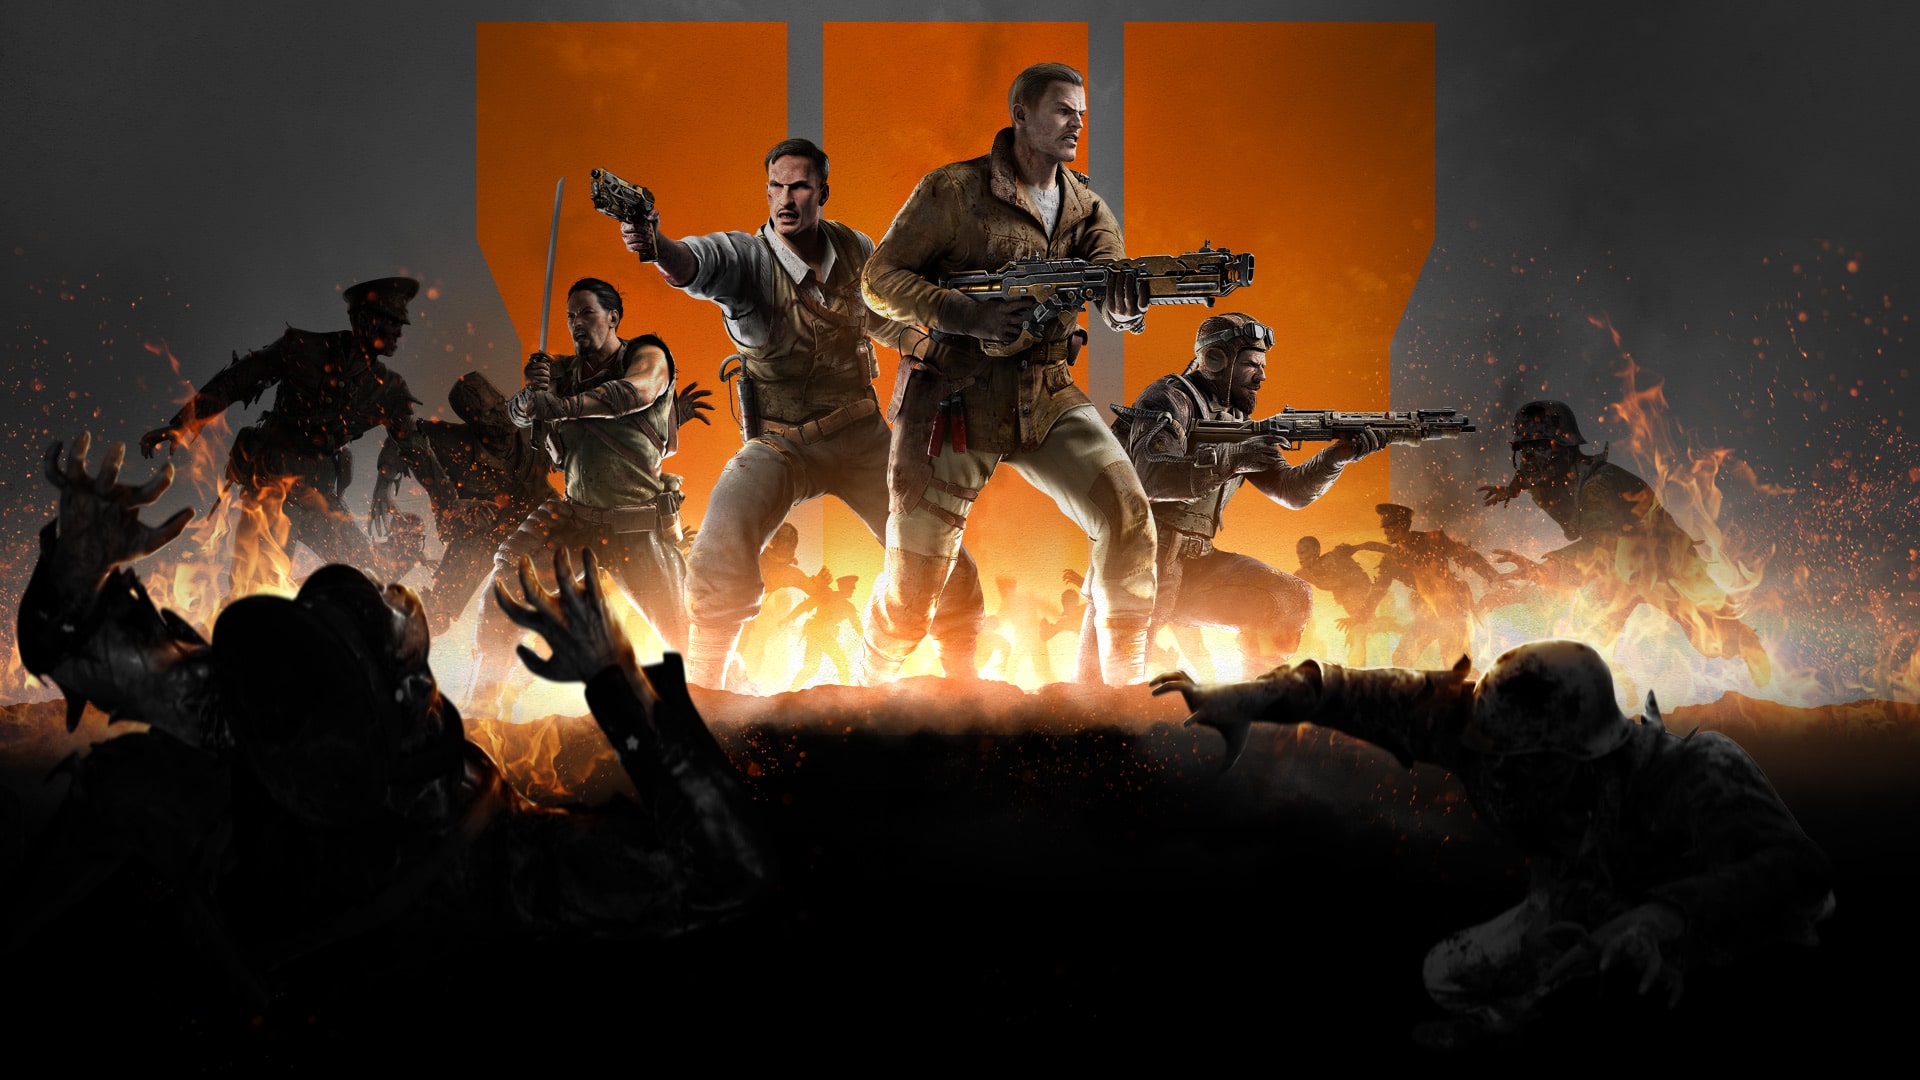 Call of Duty®: Black Ops III - Salvation DLC